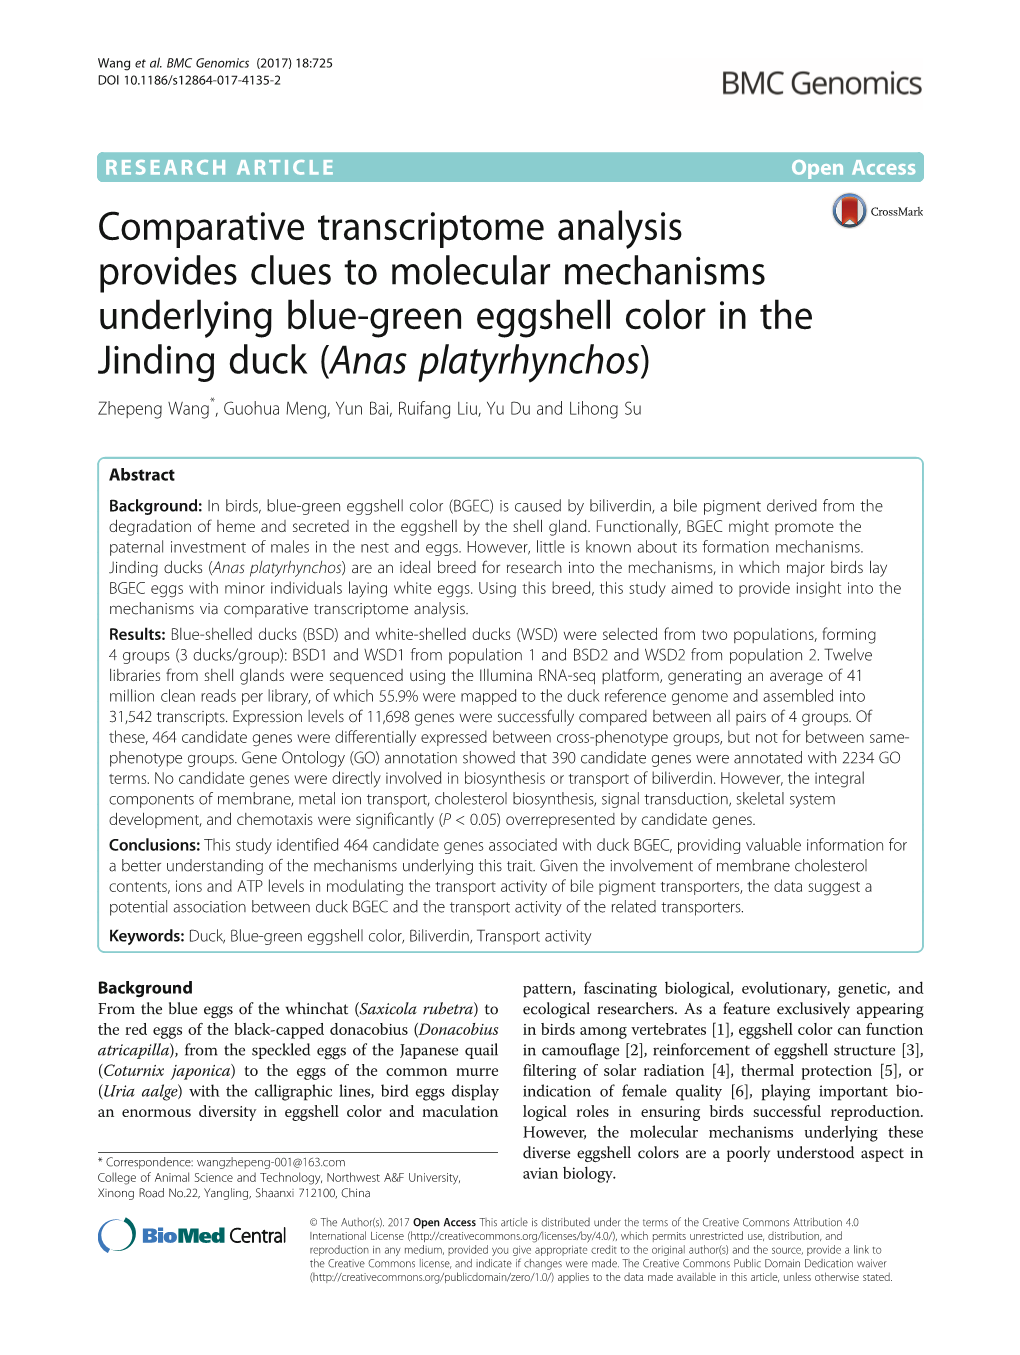 Comparative Transcriptome Analysis Provides Clues to Molecular